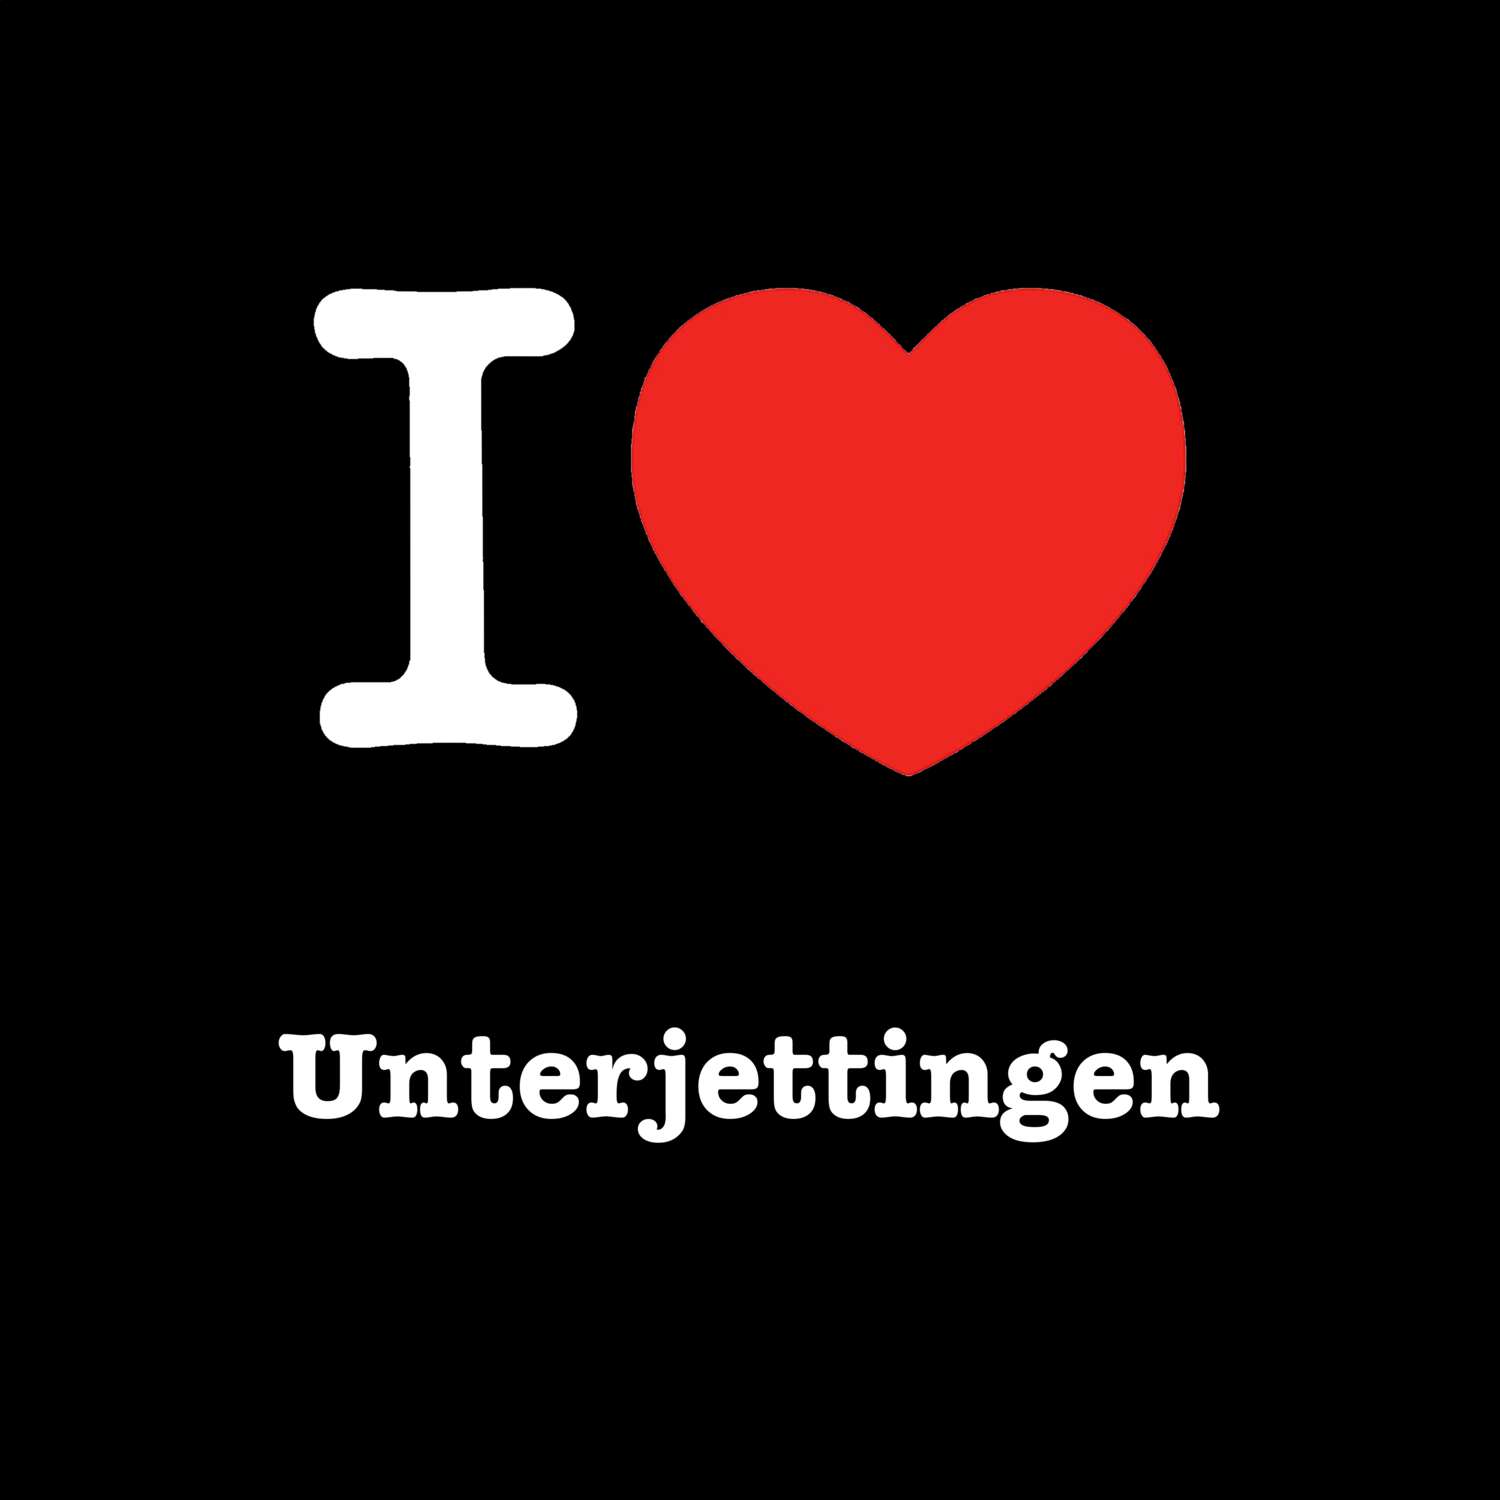 Unterjettingen T-Shirt »I love«